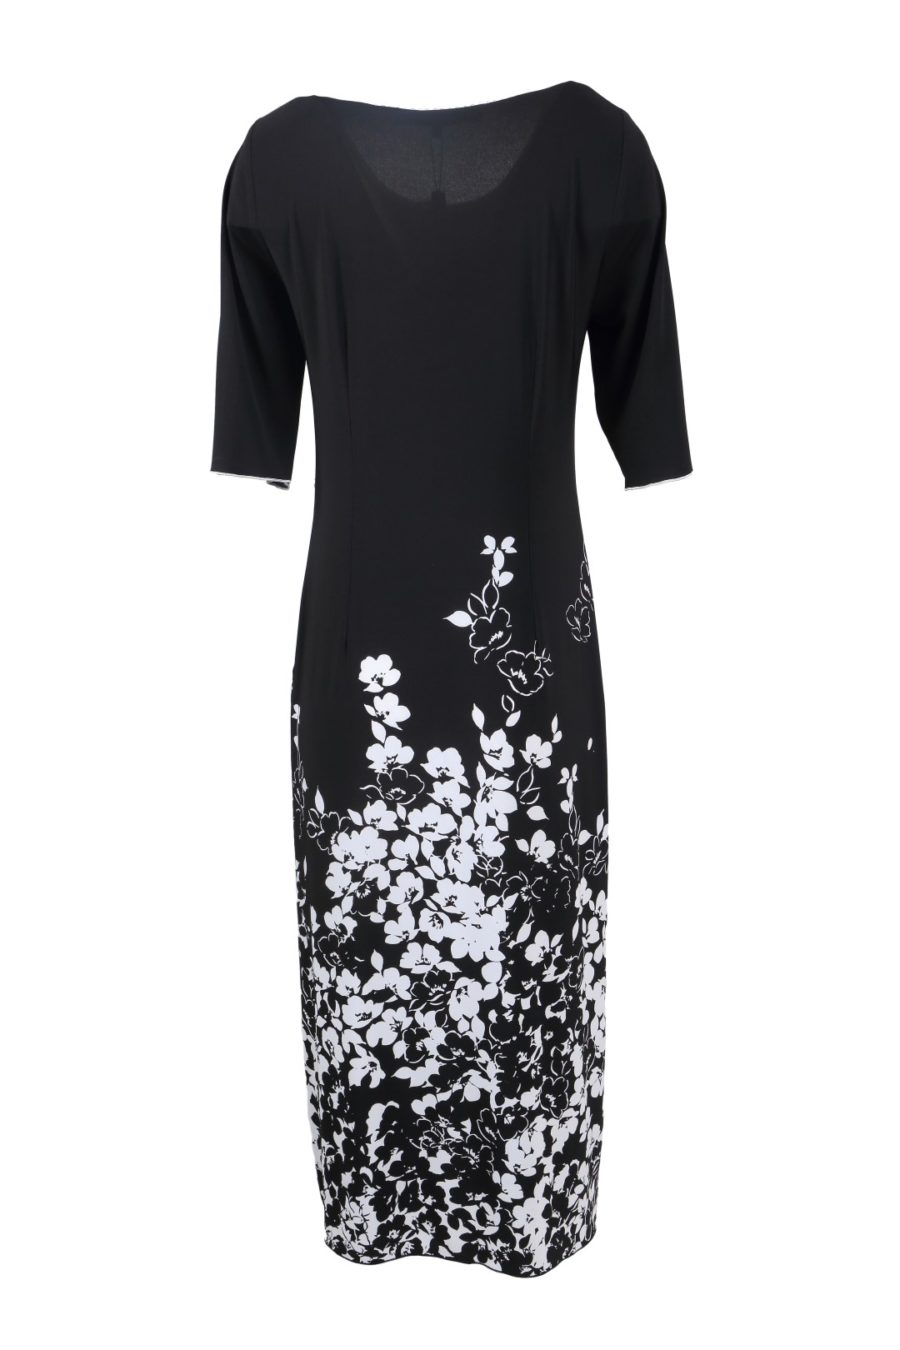 Maxi dress, single jersey, black with white flower print